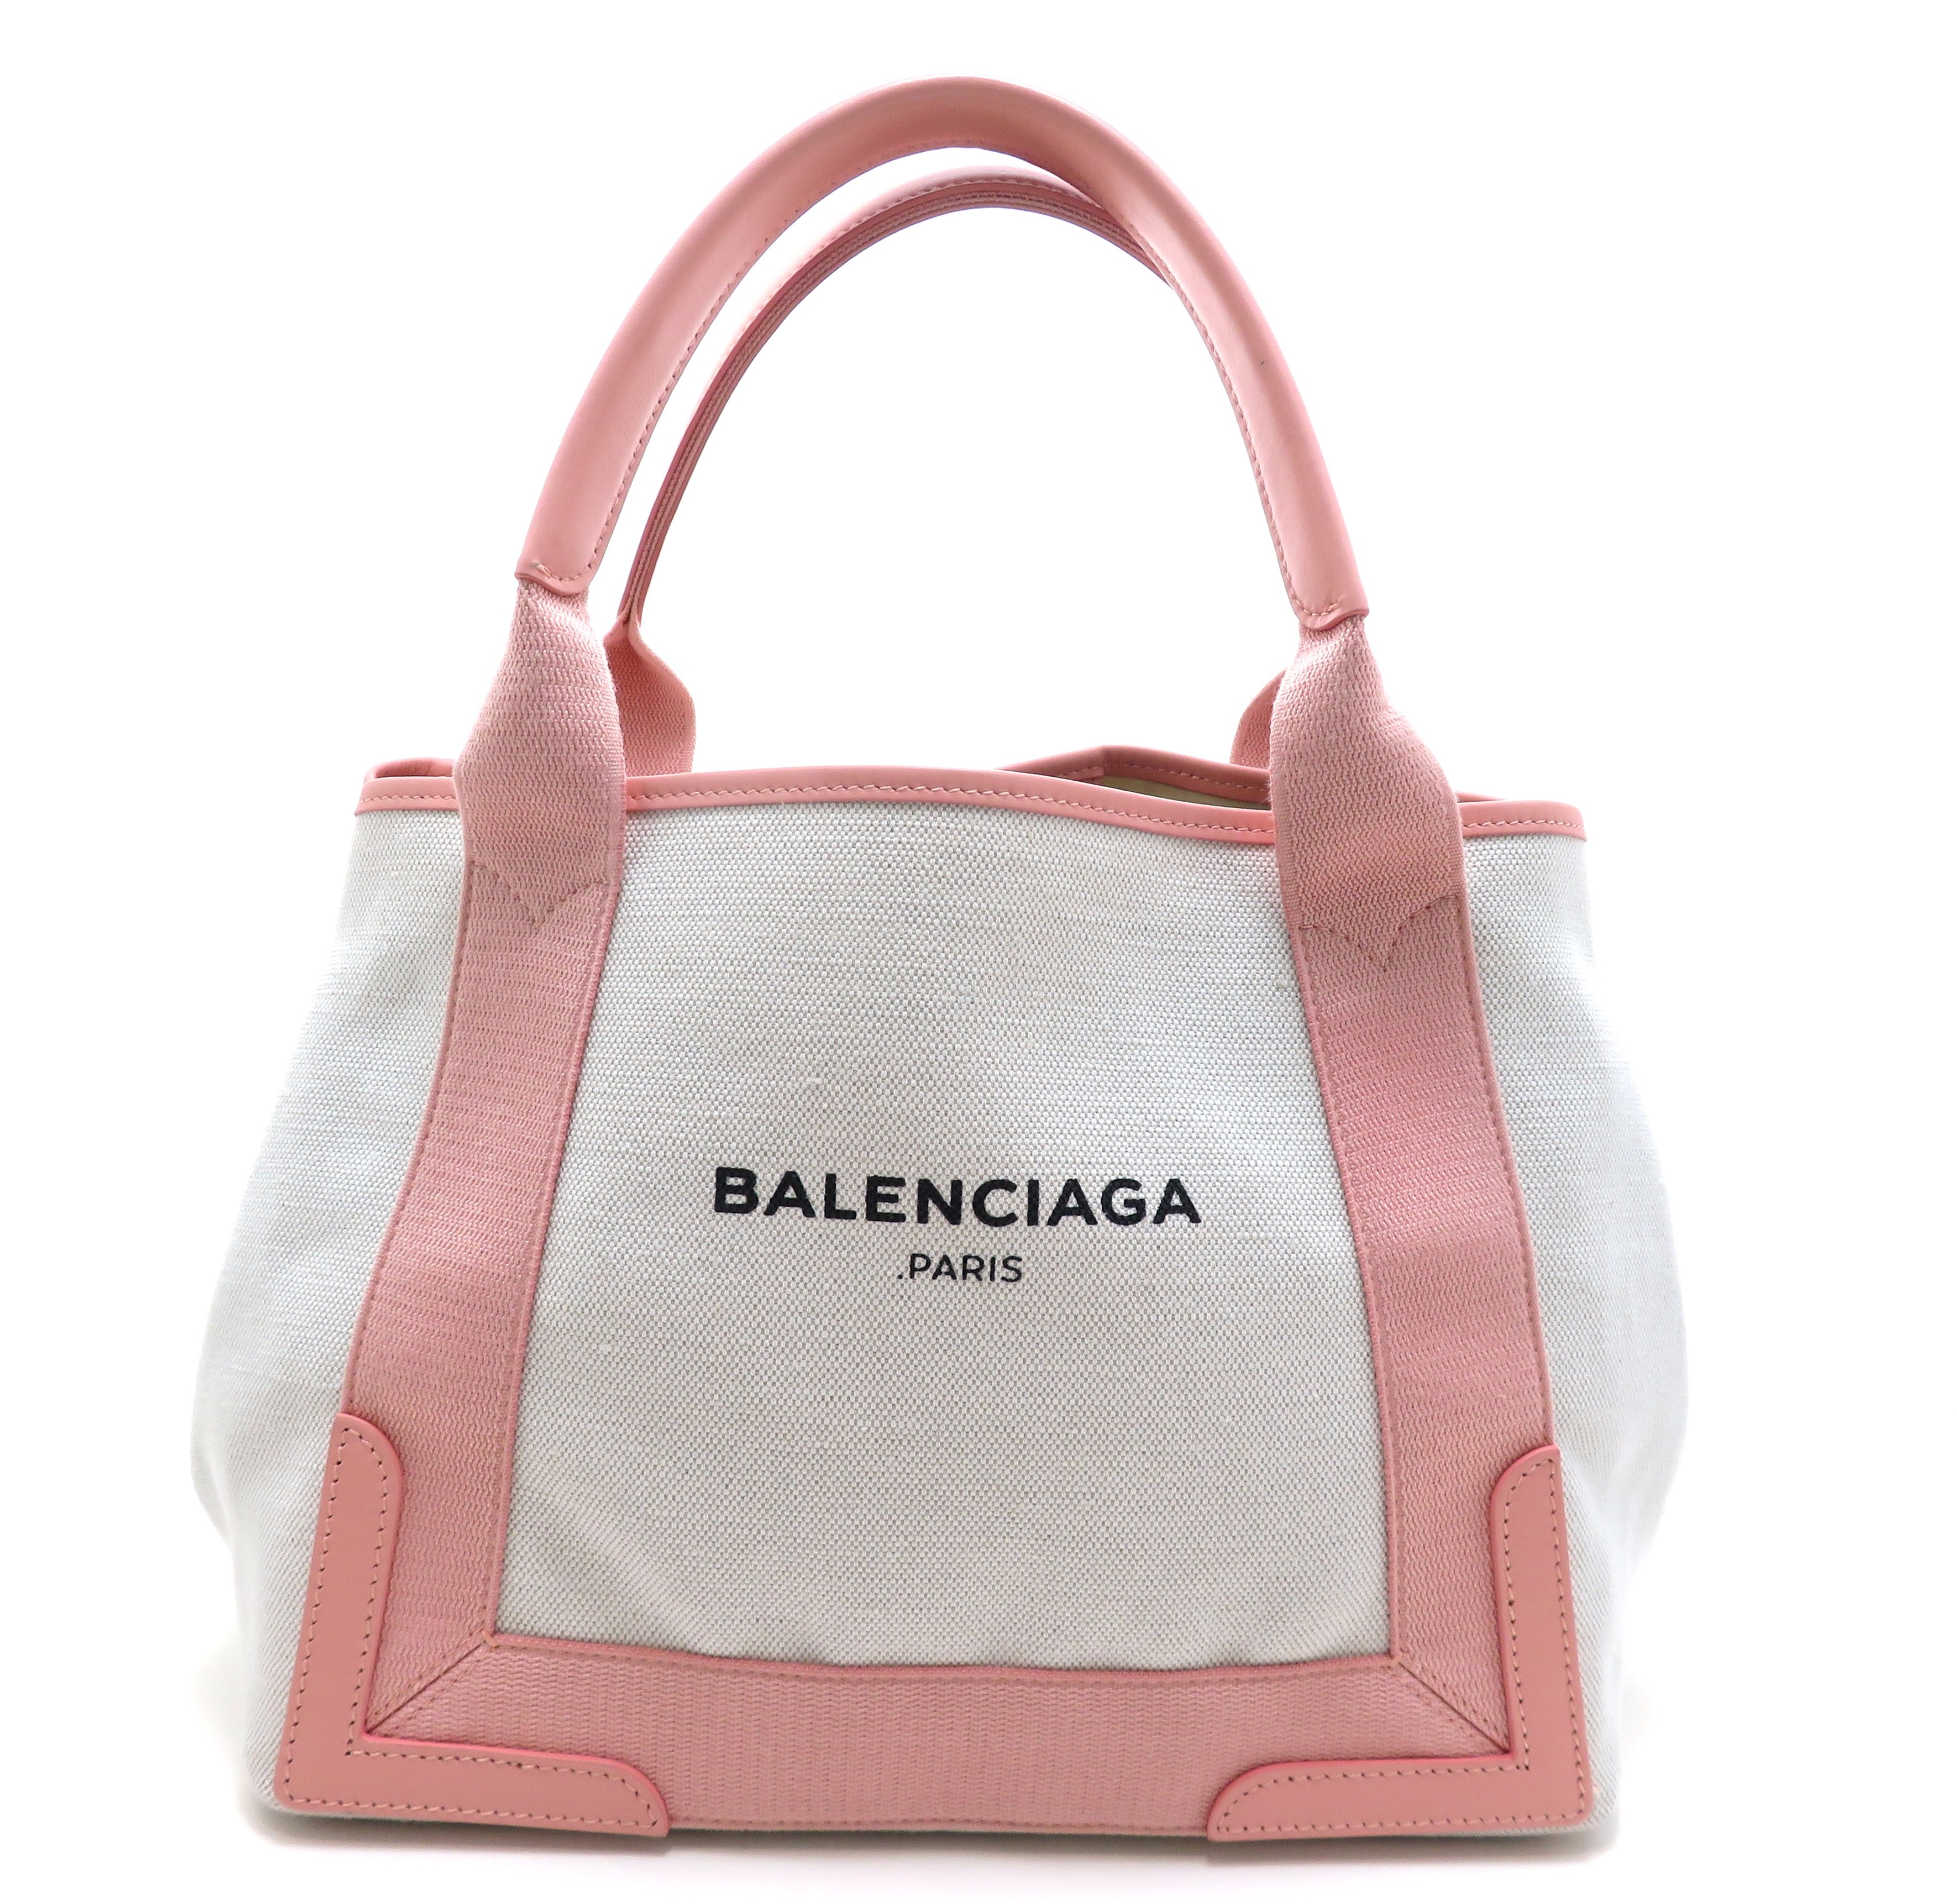 BALENCIAGA バレンシアガ ネイビーカバスS 339933 ホワイト/ピンク